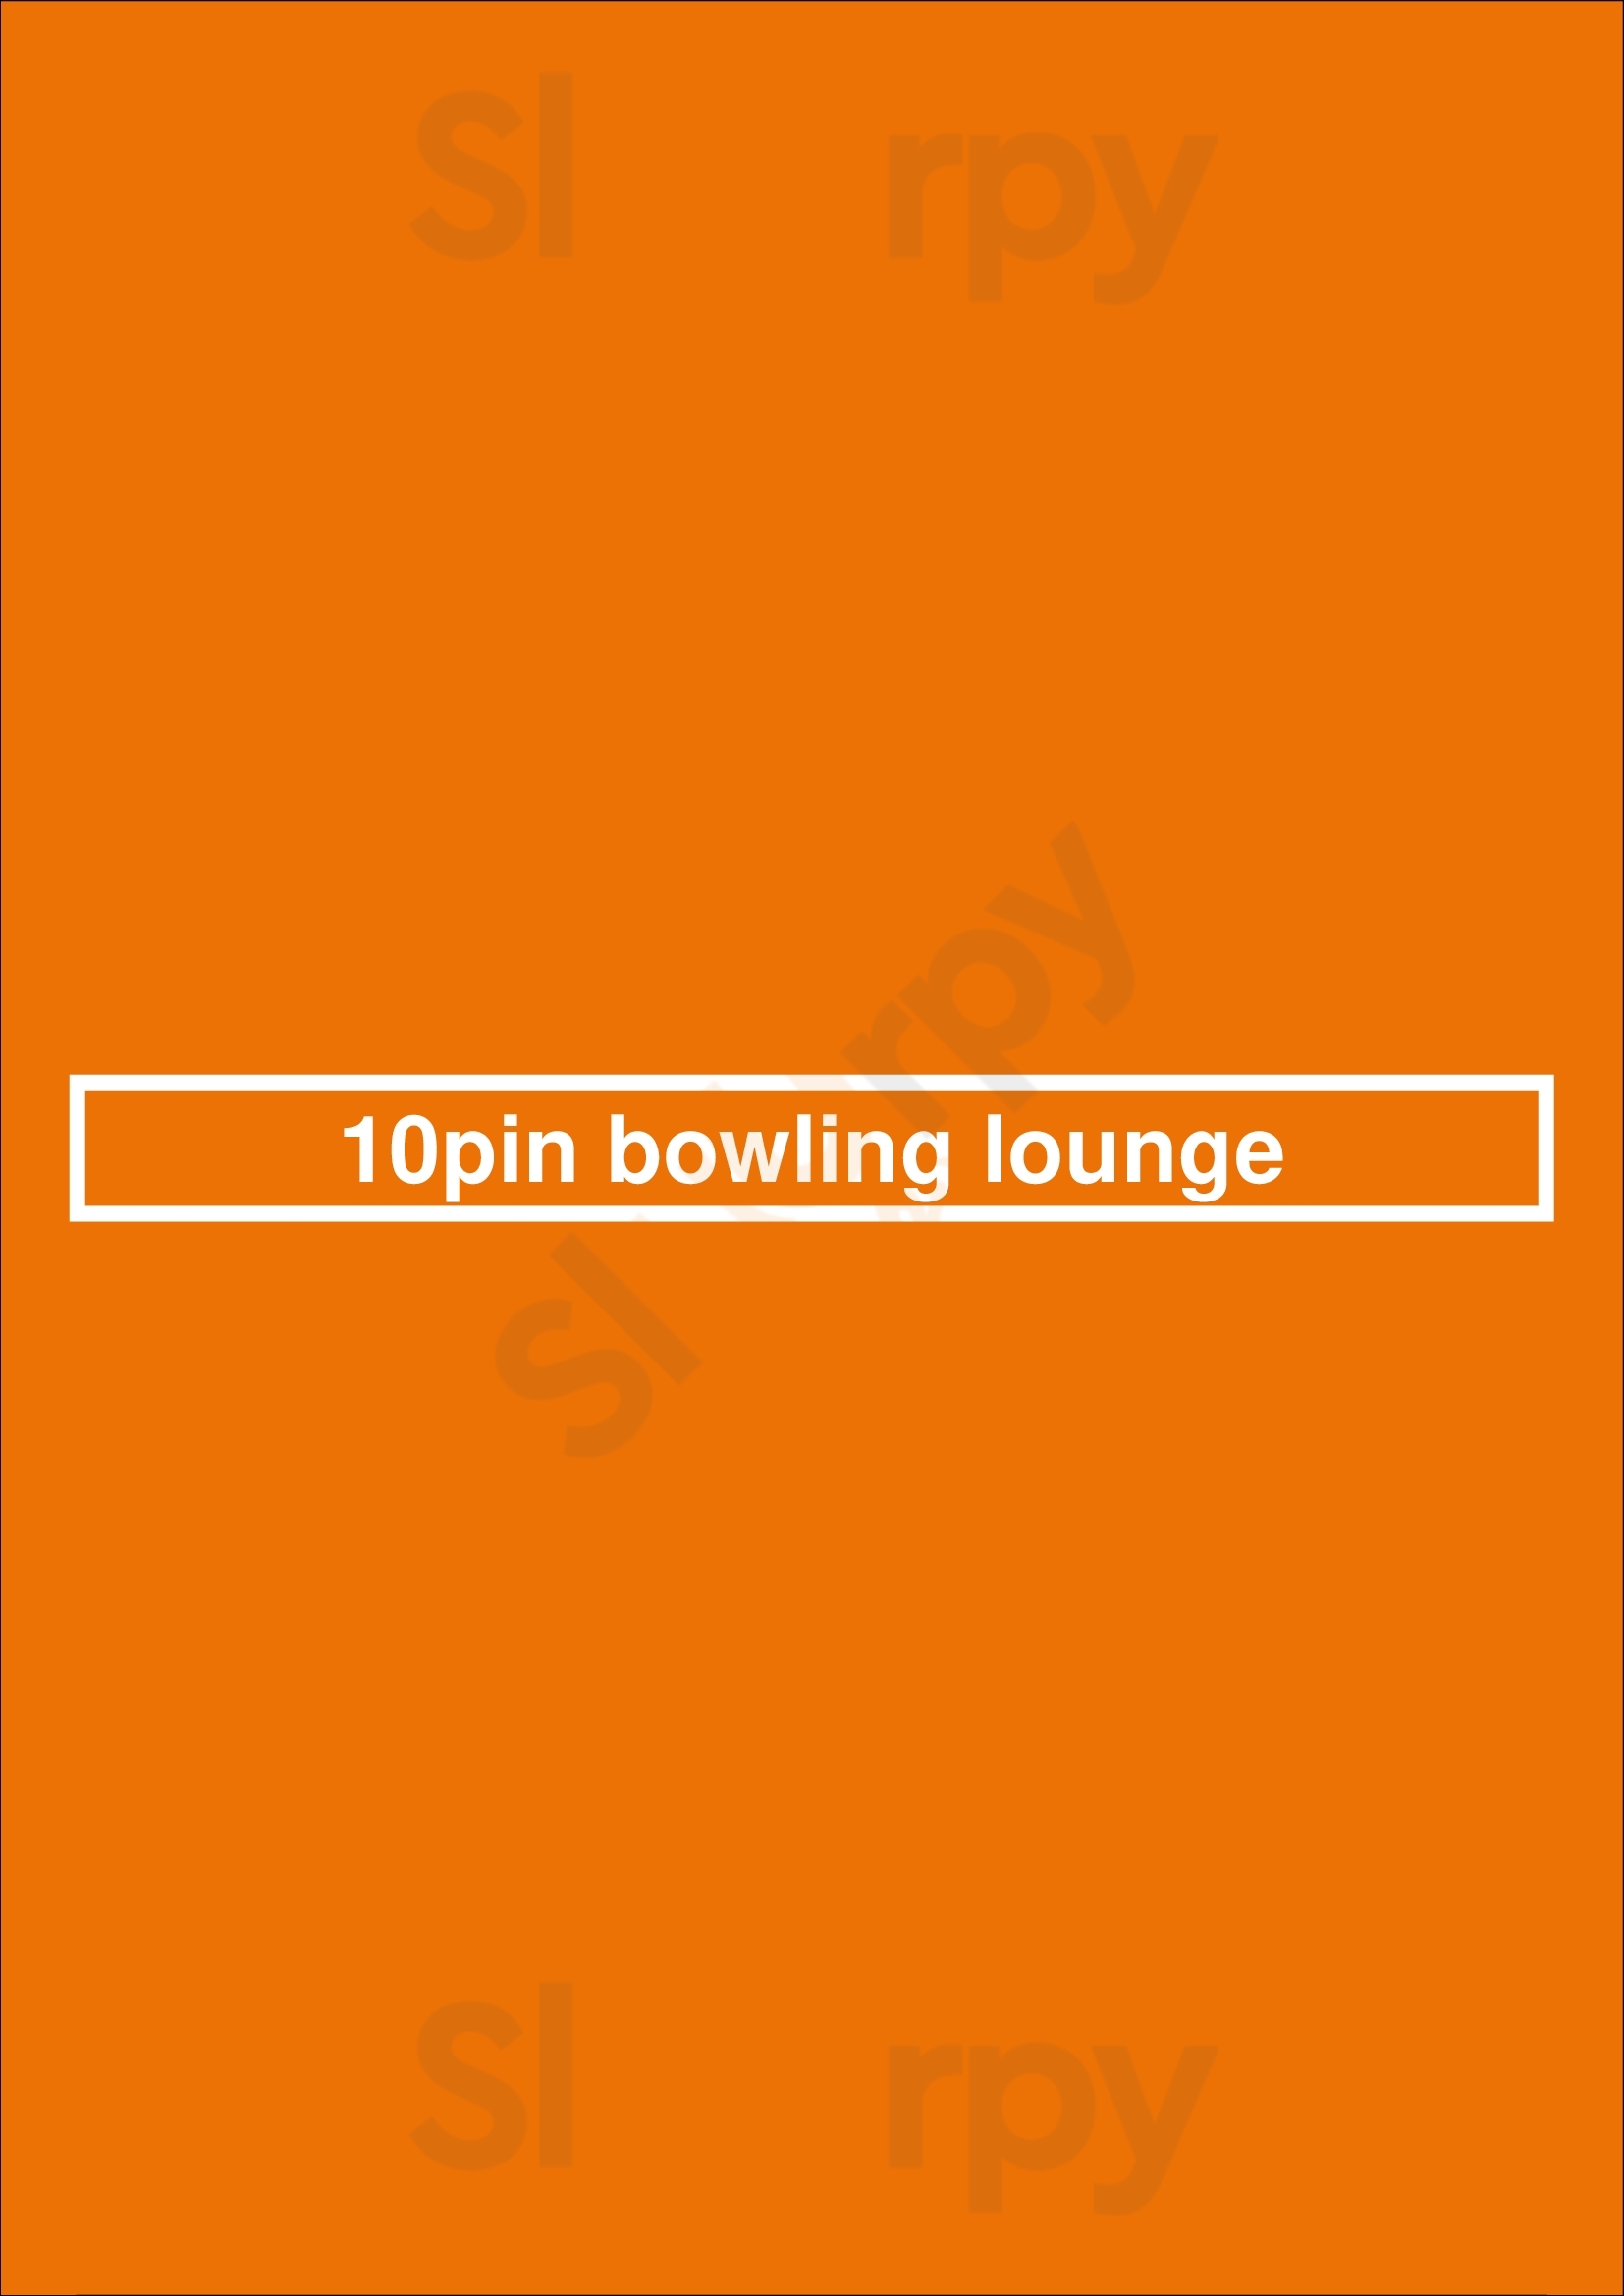 10pin Bowling Lounge Chicago Menu - 1